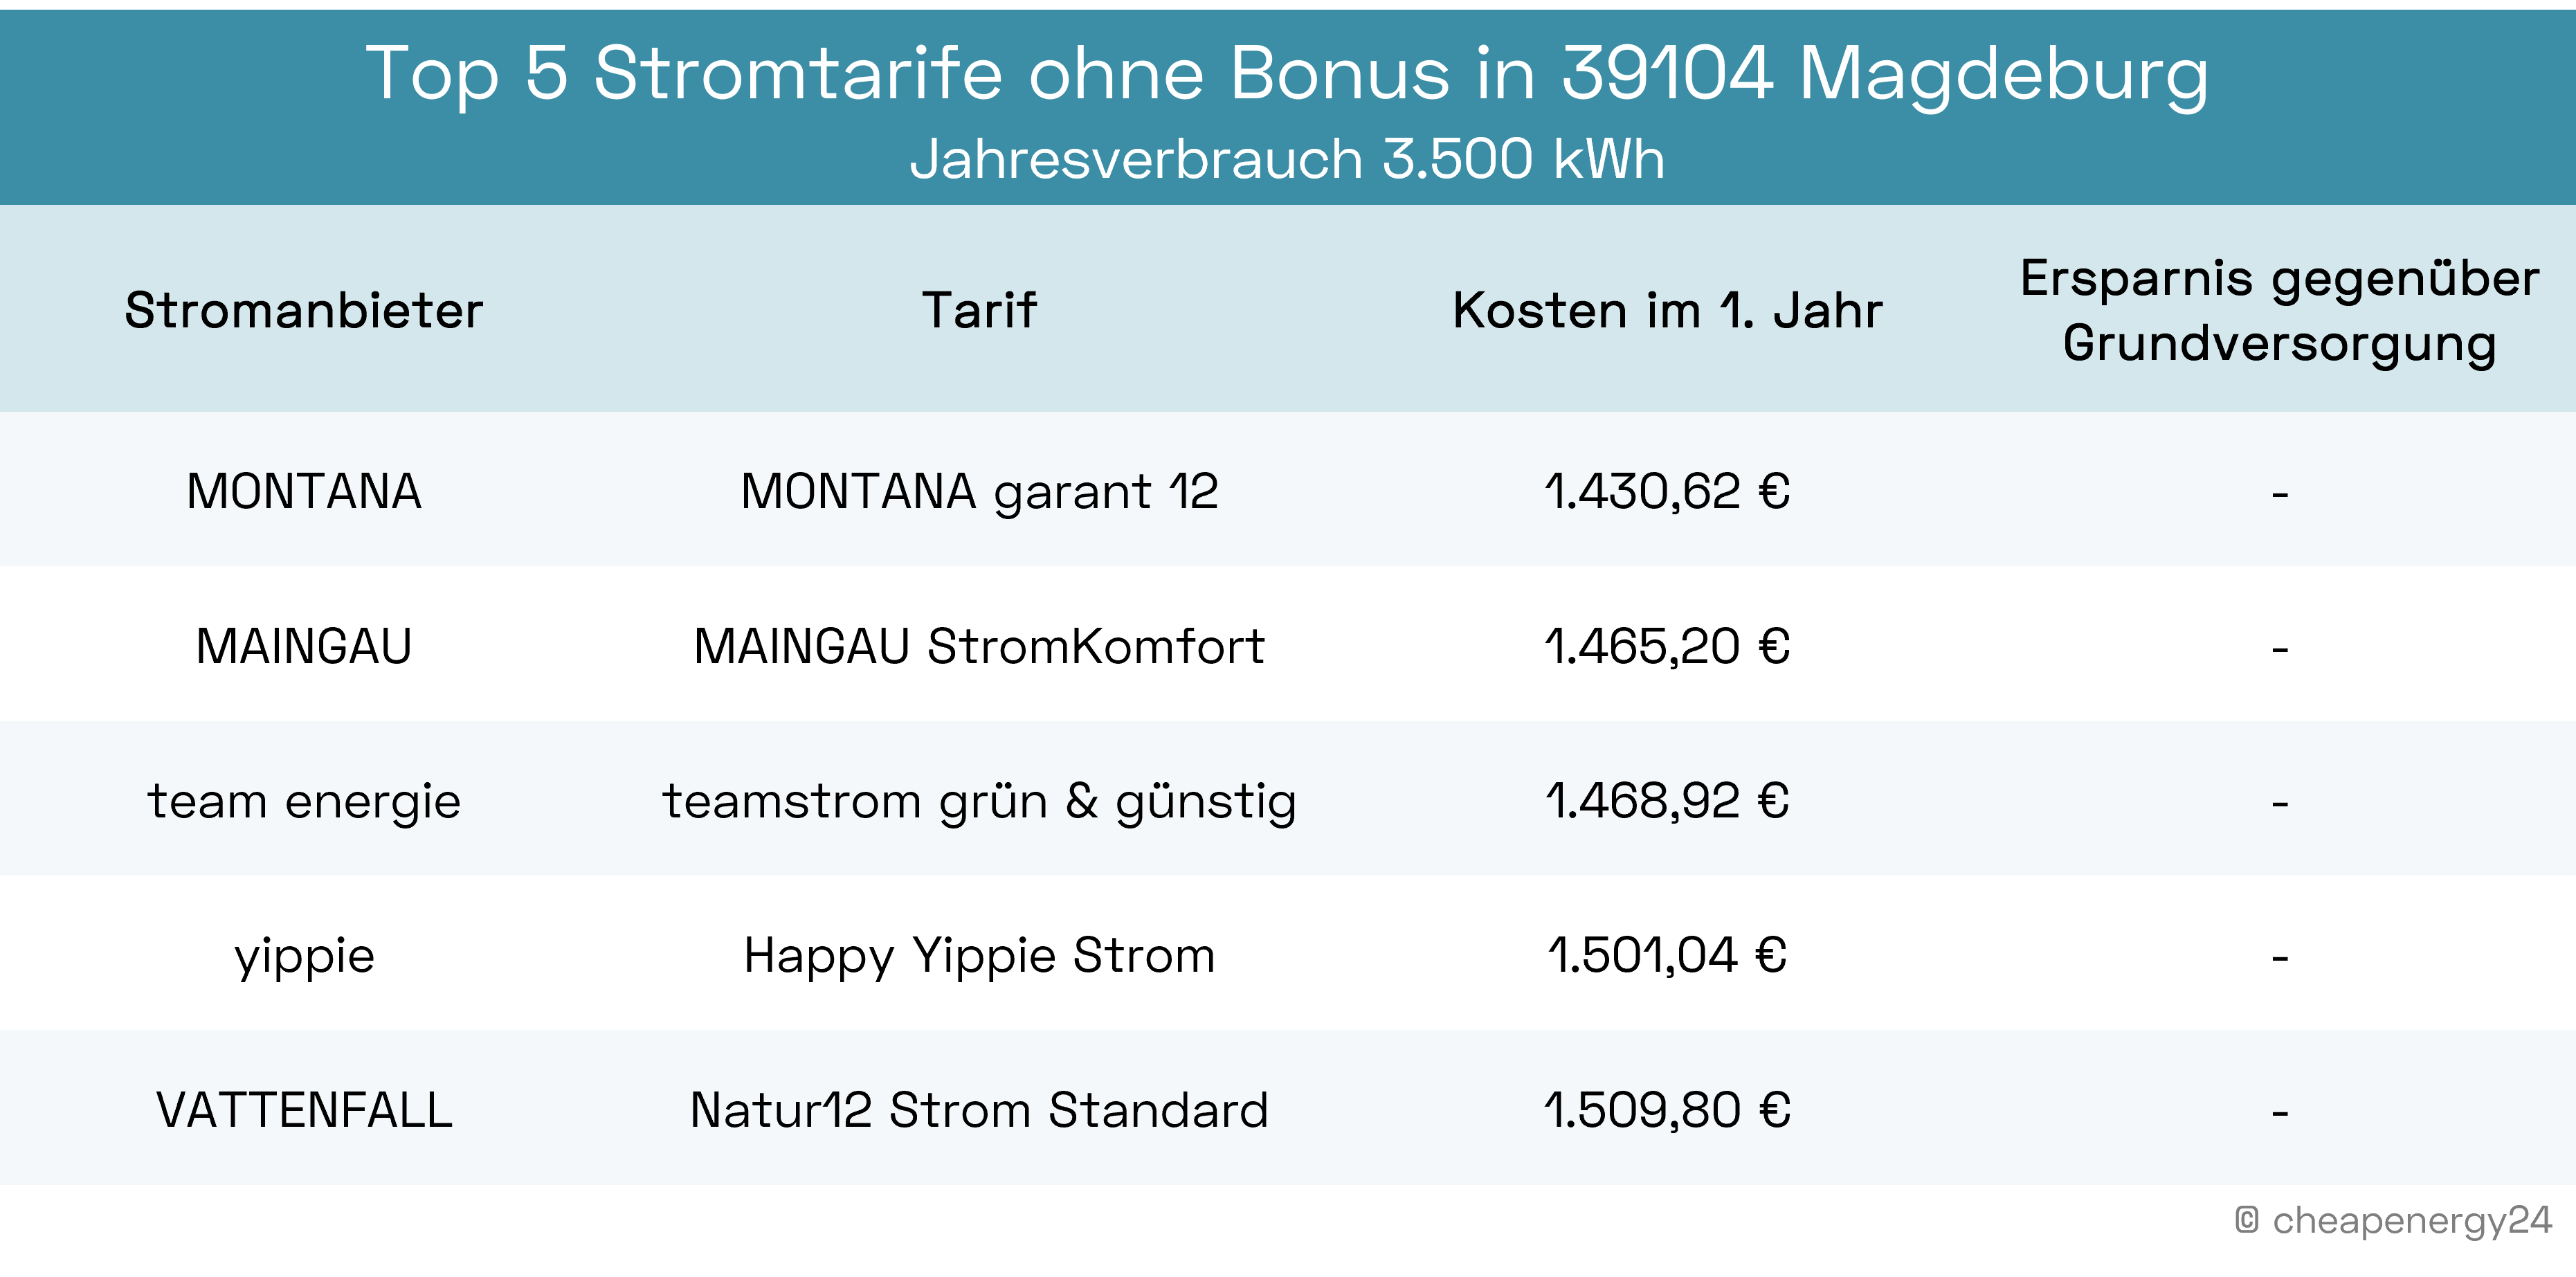 Beste Stromtarife ohne Bonus in Magdeburg